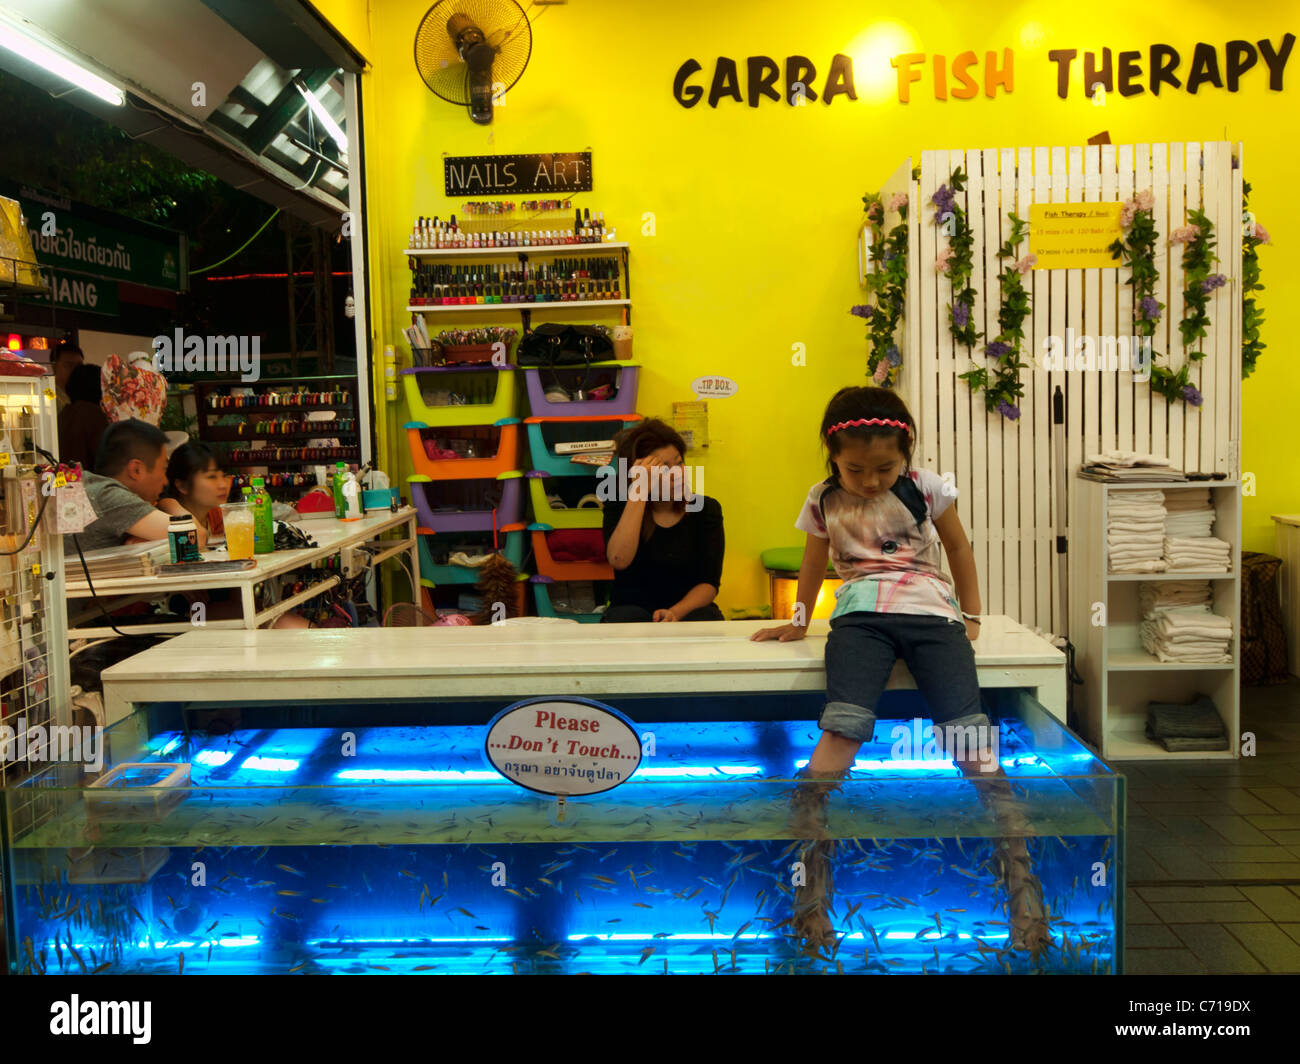 Garra fish therapy Stock Photo